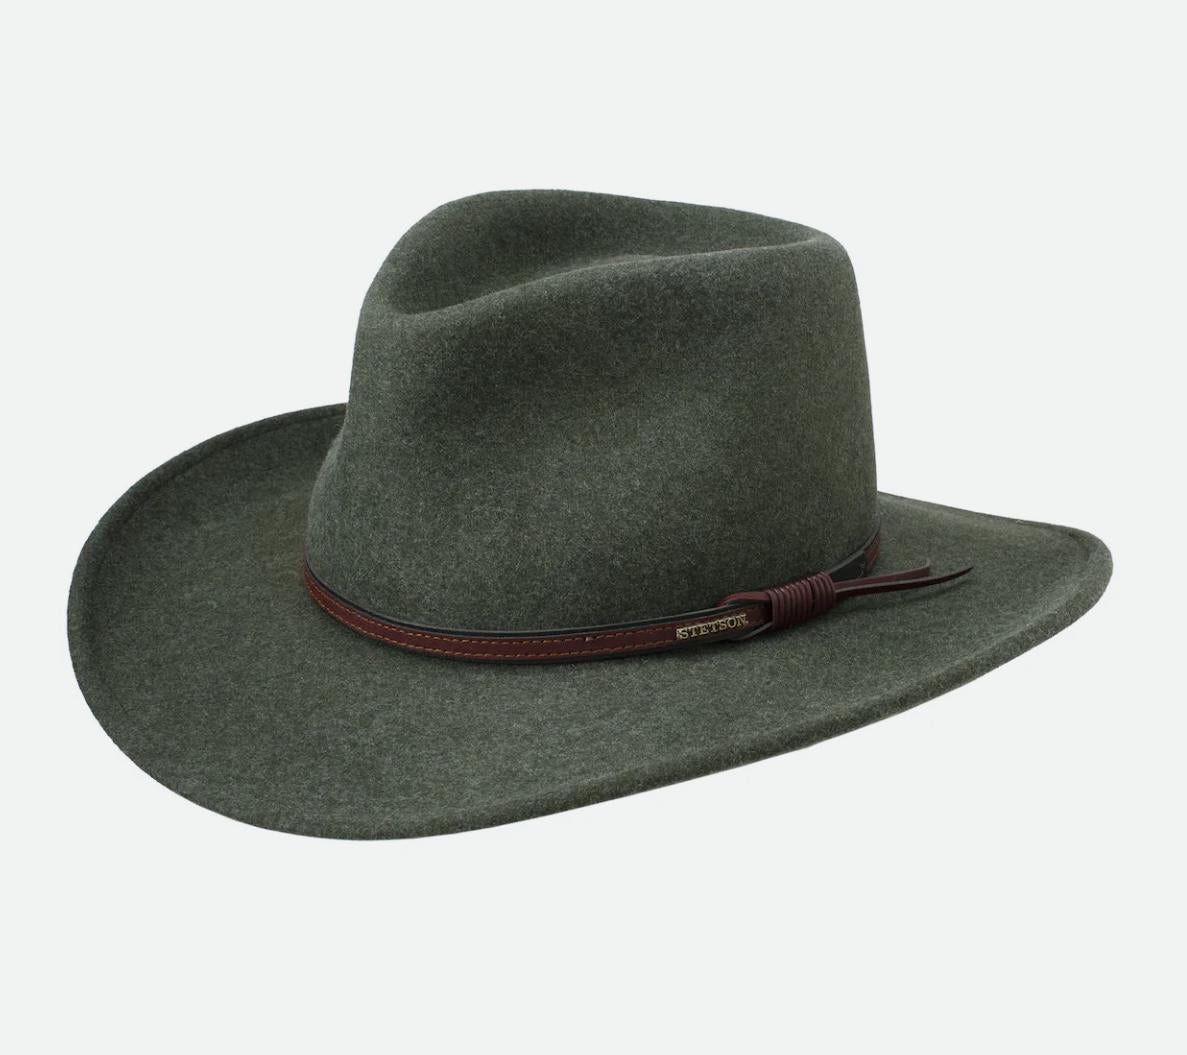 Stetson Men's Bozeman Outdoor Hat (Loden, X-Large)